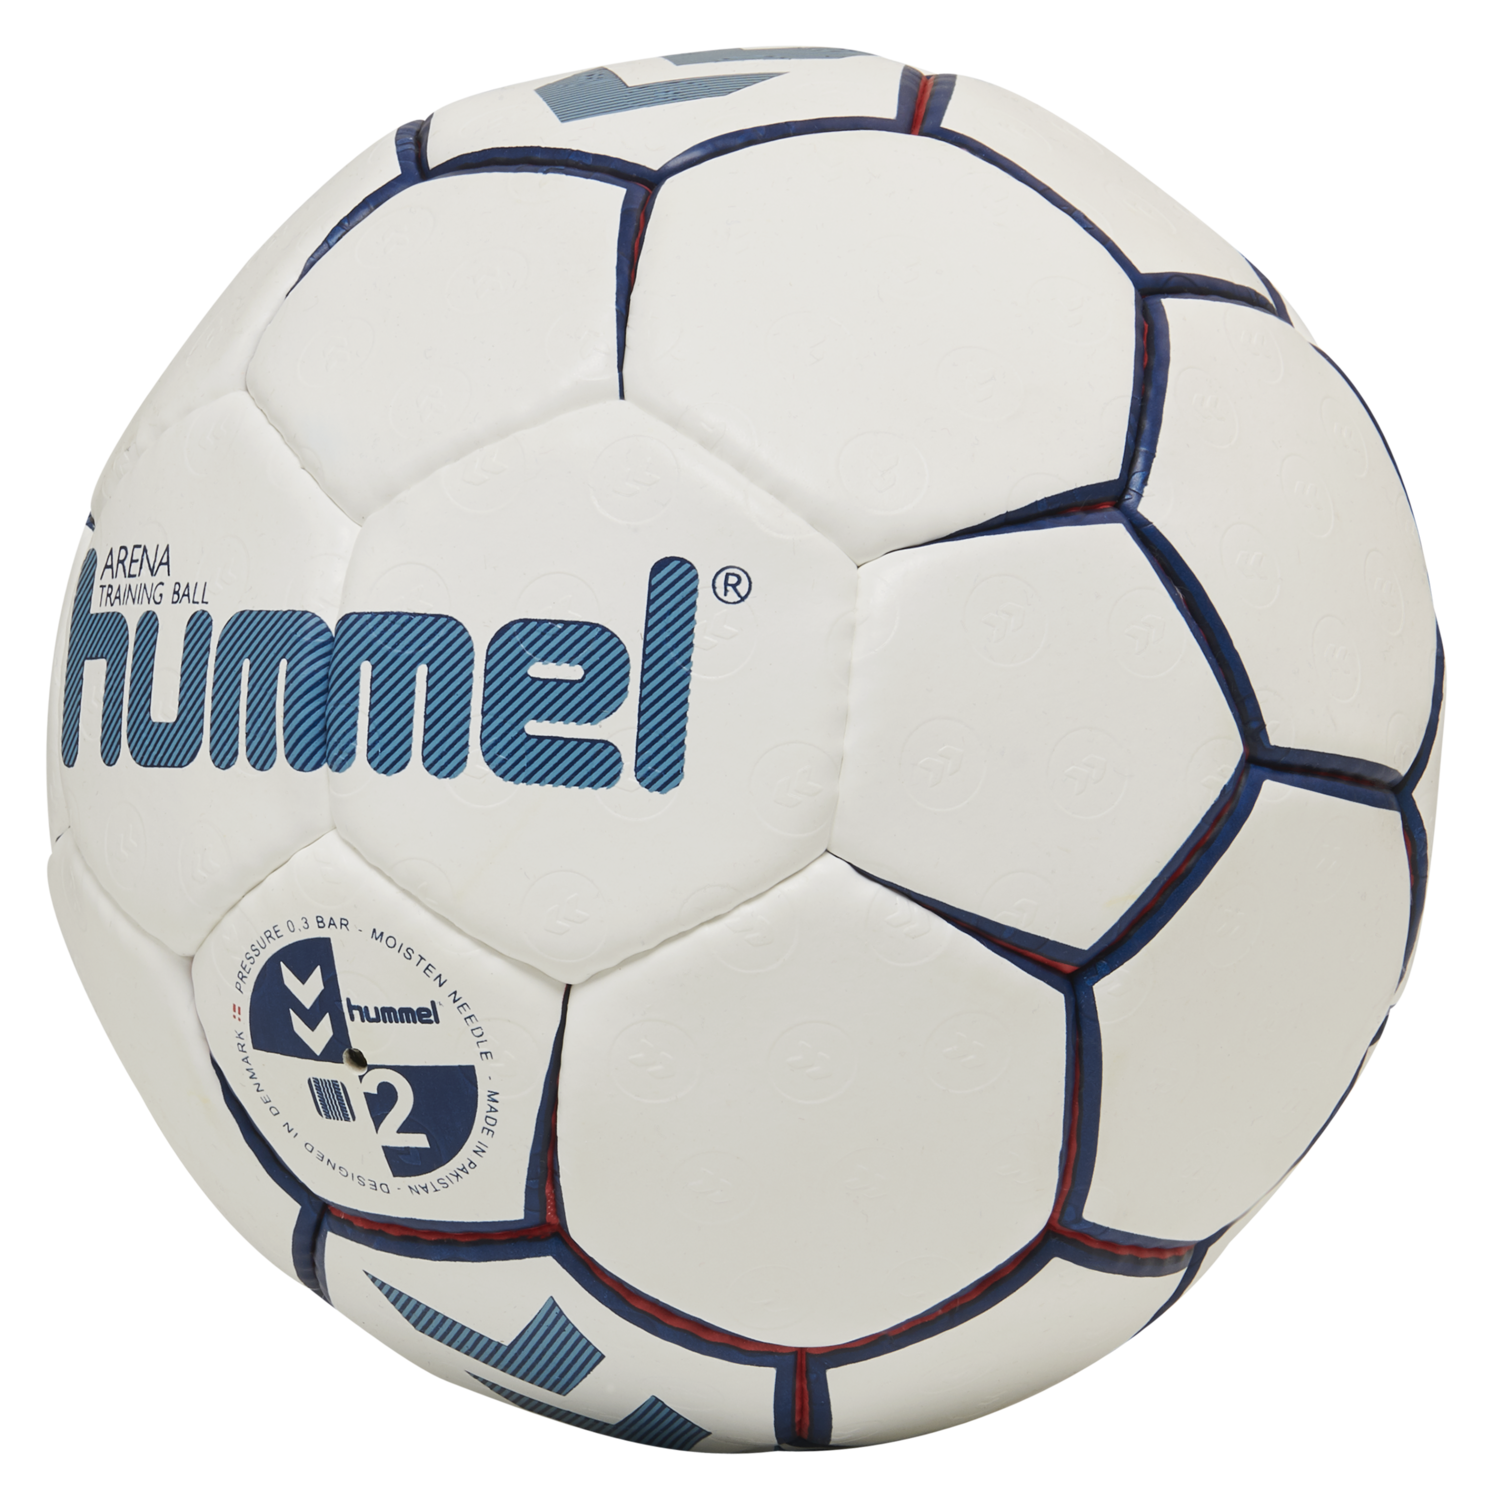 Hummel Handball Arena 203598